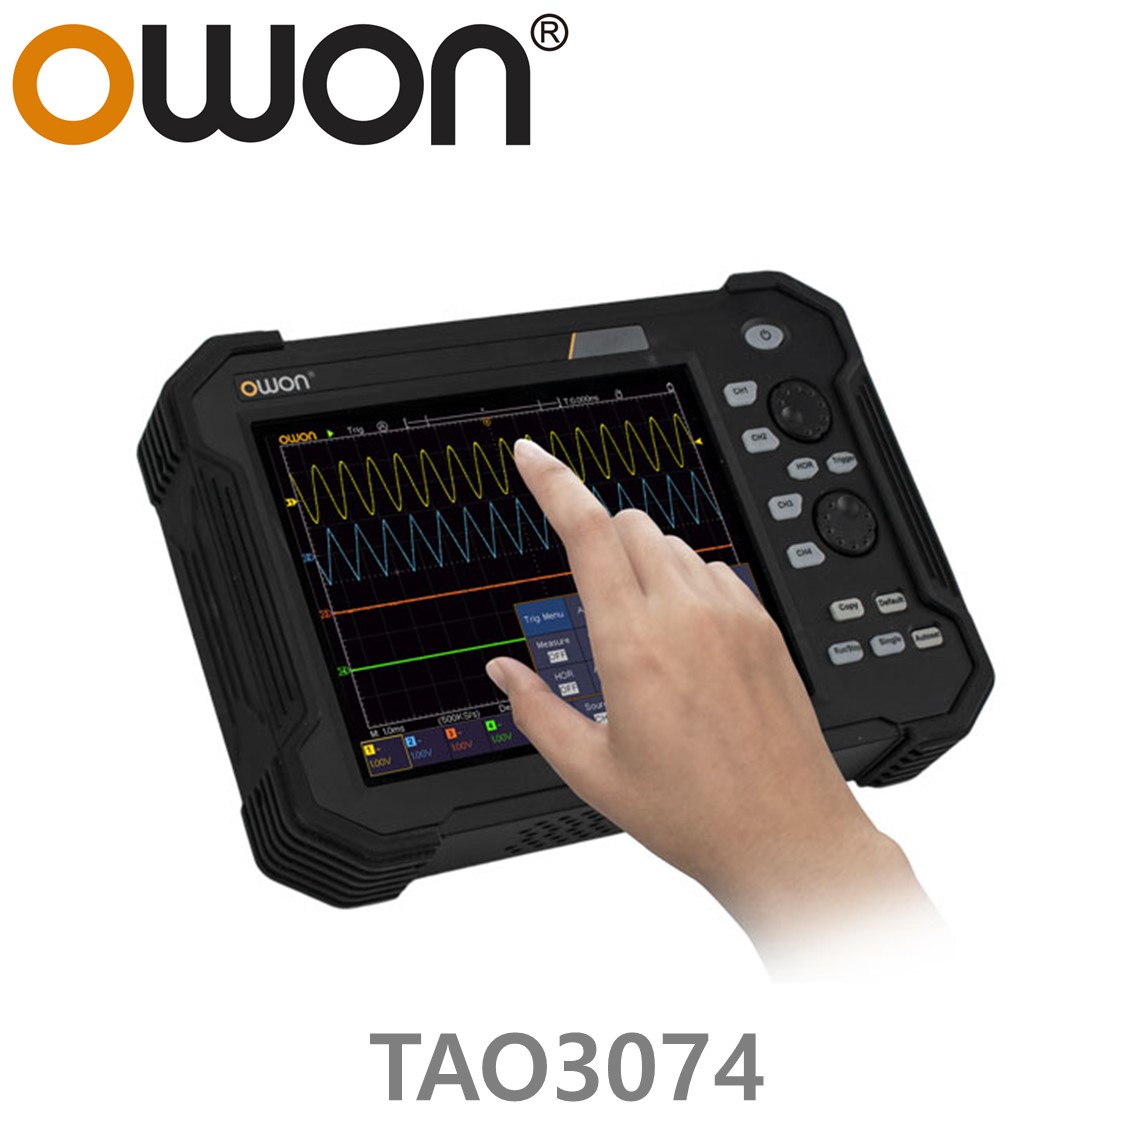 [ OWON ] TAO3074 태블릿 오실로스코프 70MHz, 4CH, 1GS/s, 8Bit